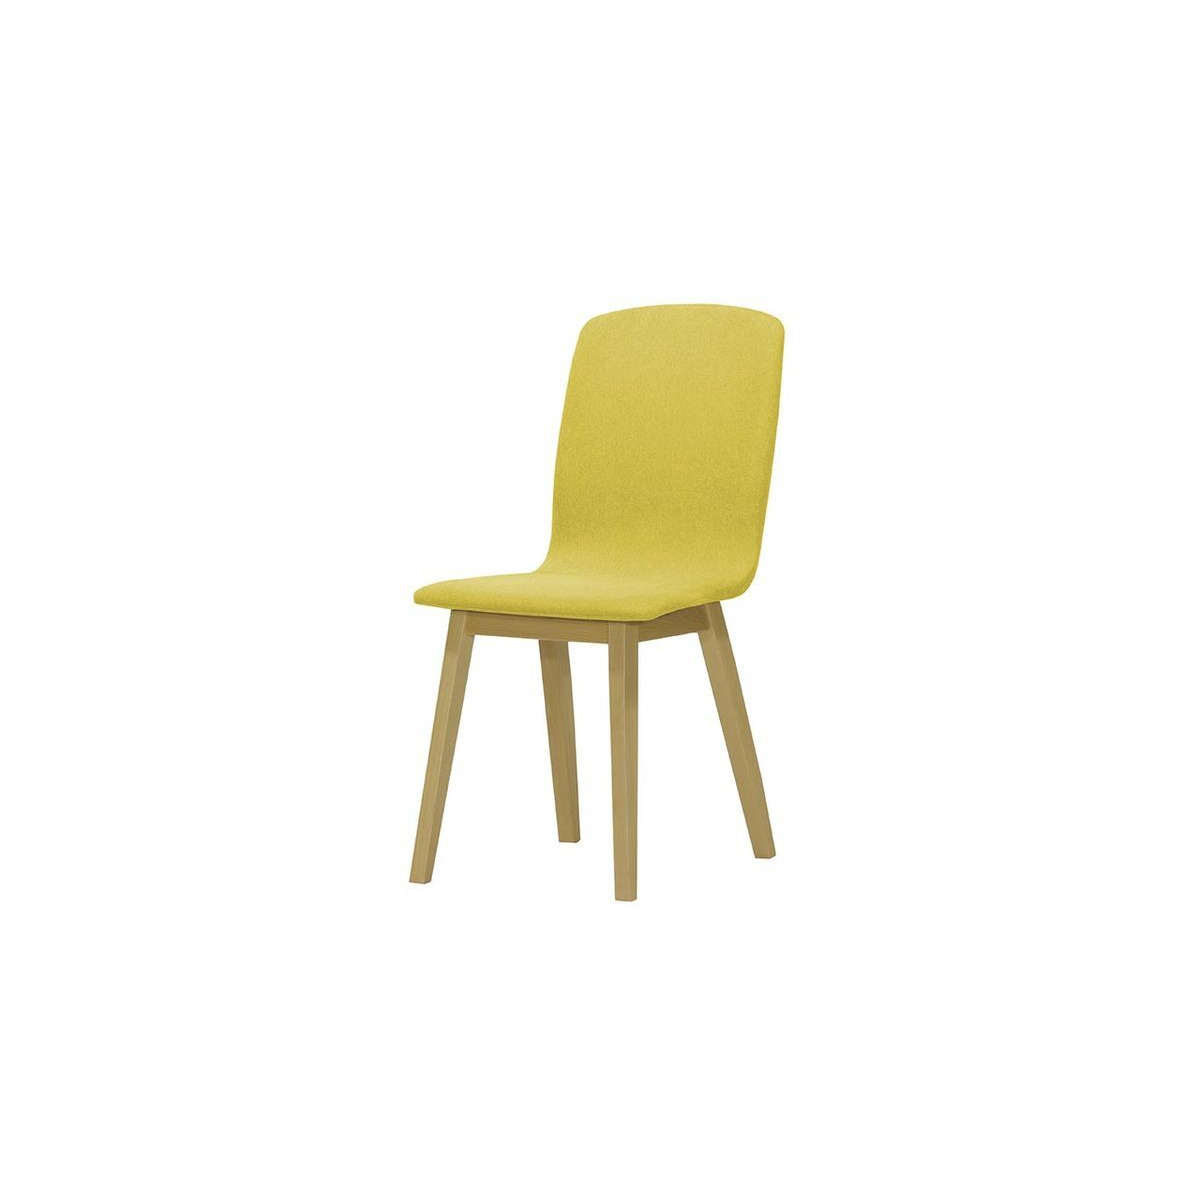 Cubo Dining Chair, yellow, Leg colour: like oak - image 1